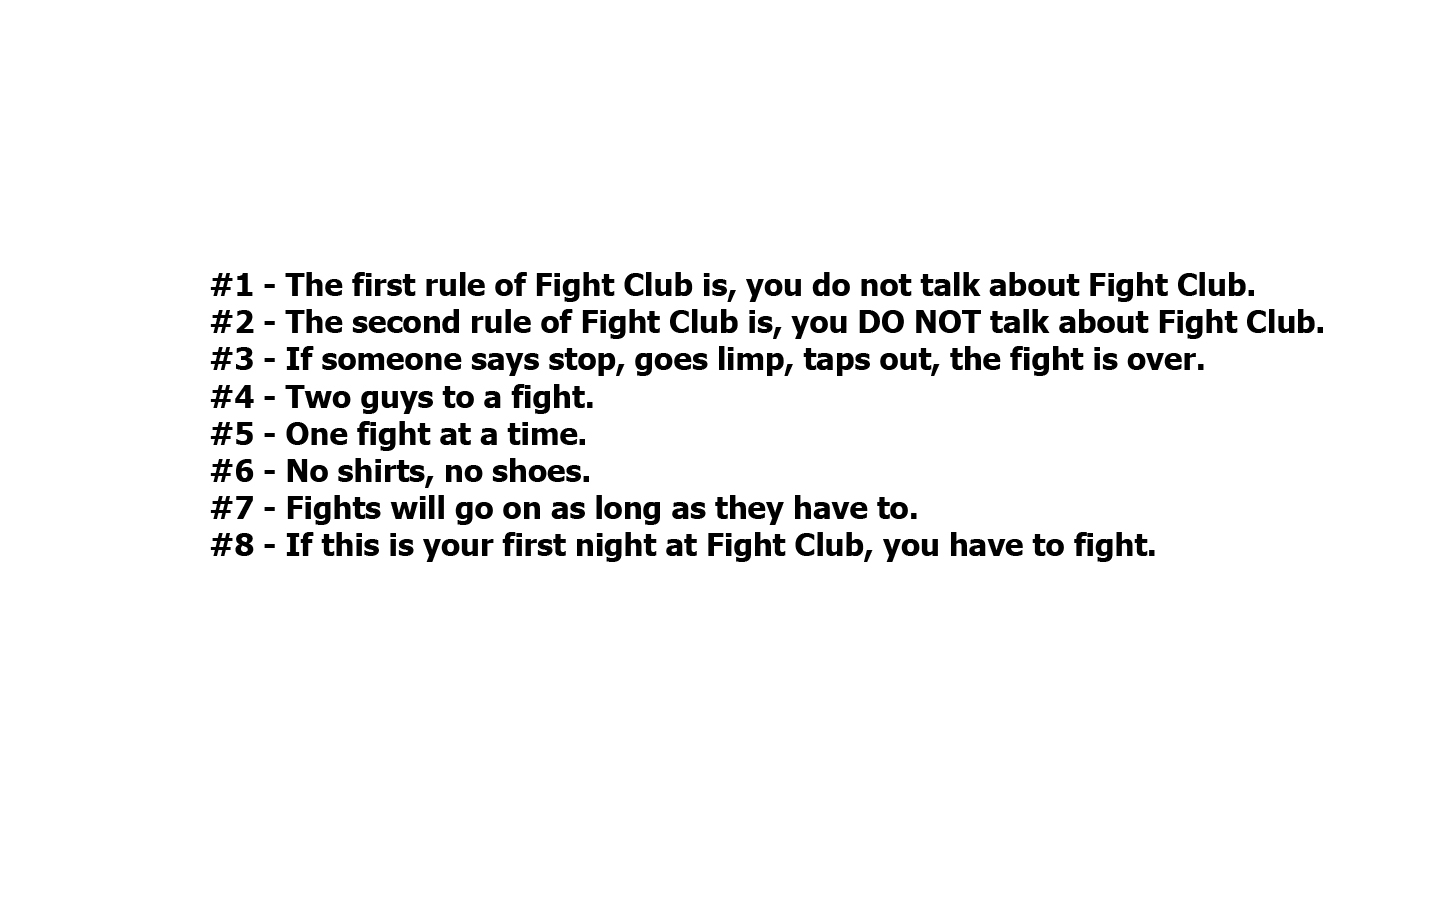 Файт на английском. Fight Club Rules. Правила бойцовского клуба на английском. Fight Club правила. First Rule of Fight Club.